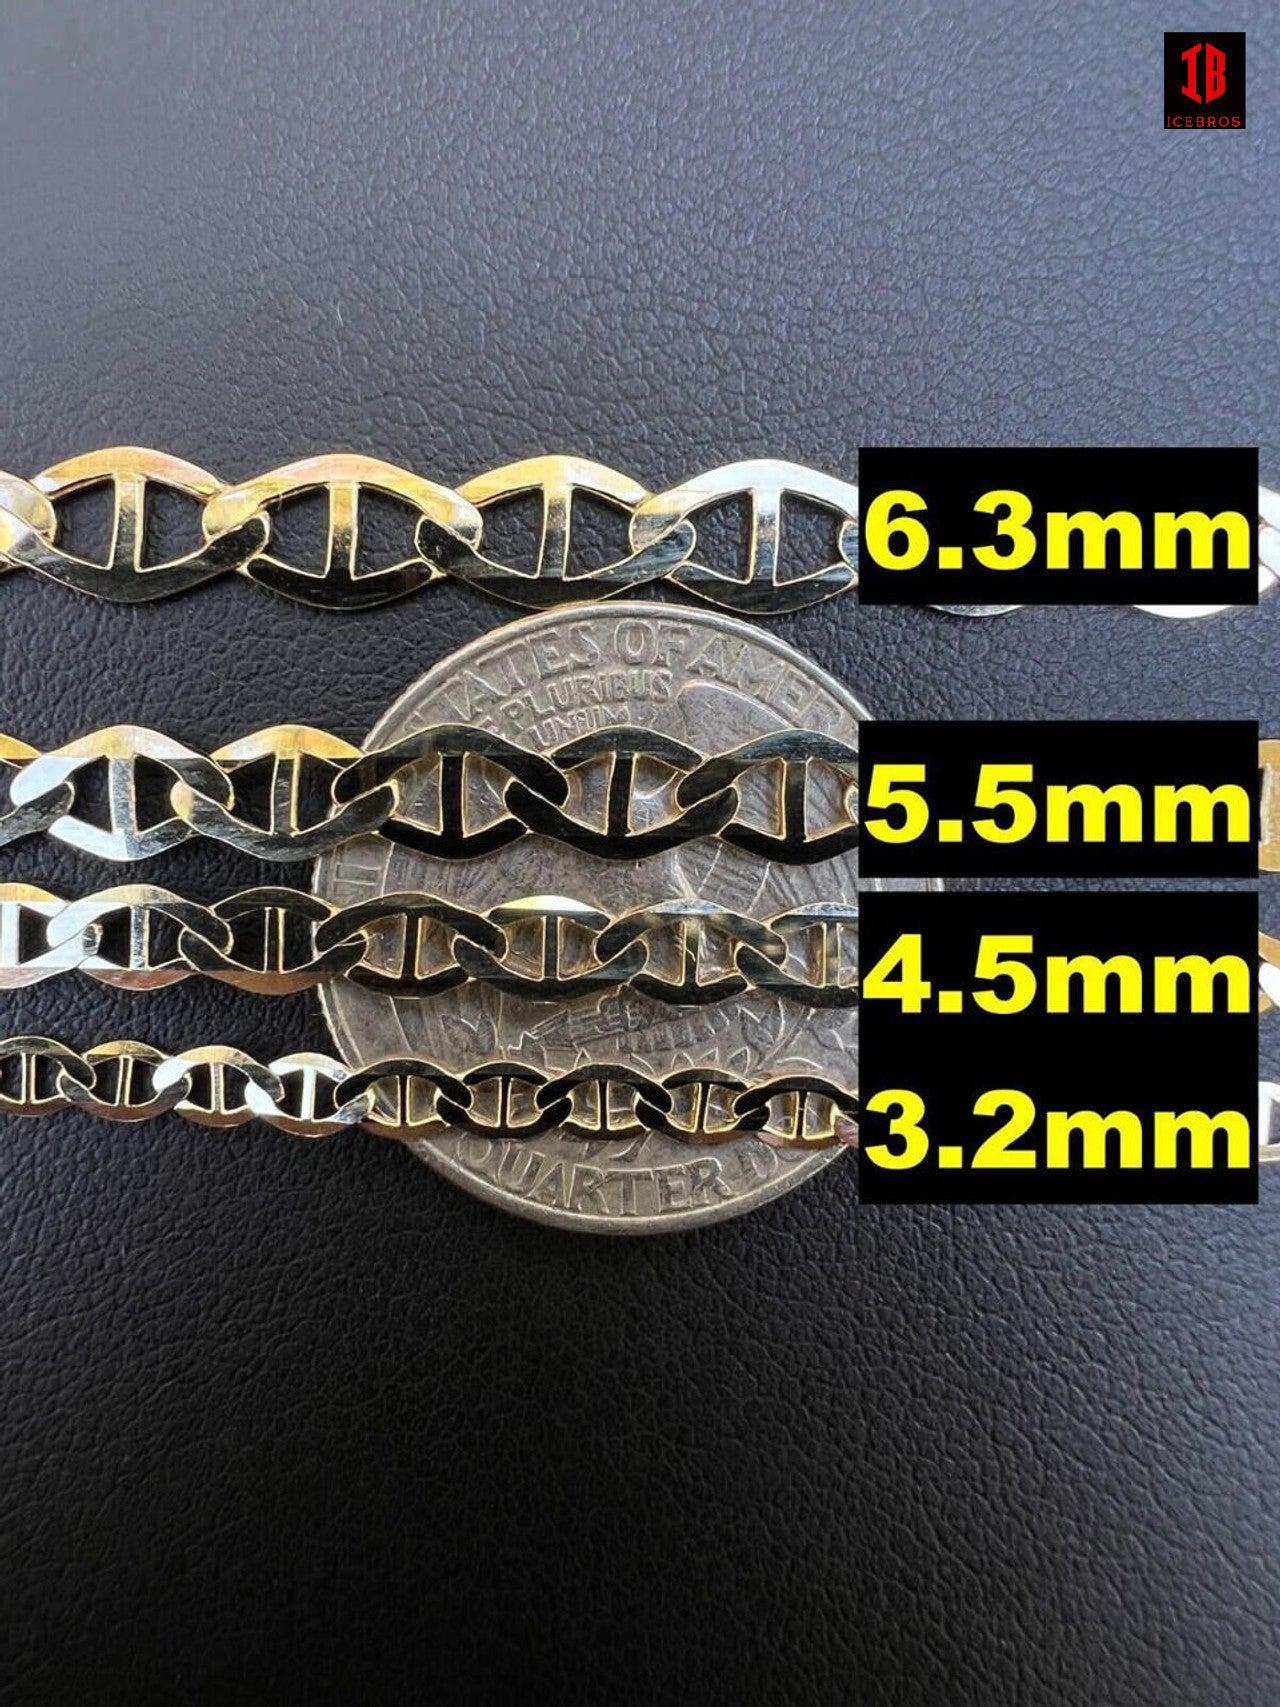 14k Genuine Solid Gold Mariner Chain 3.2mm-6.3mm Thick 16-24" Men's Ladies Necklace